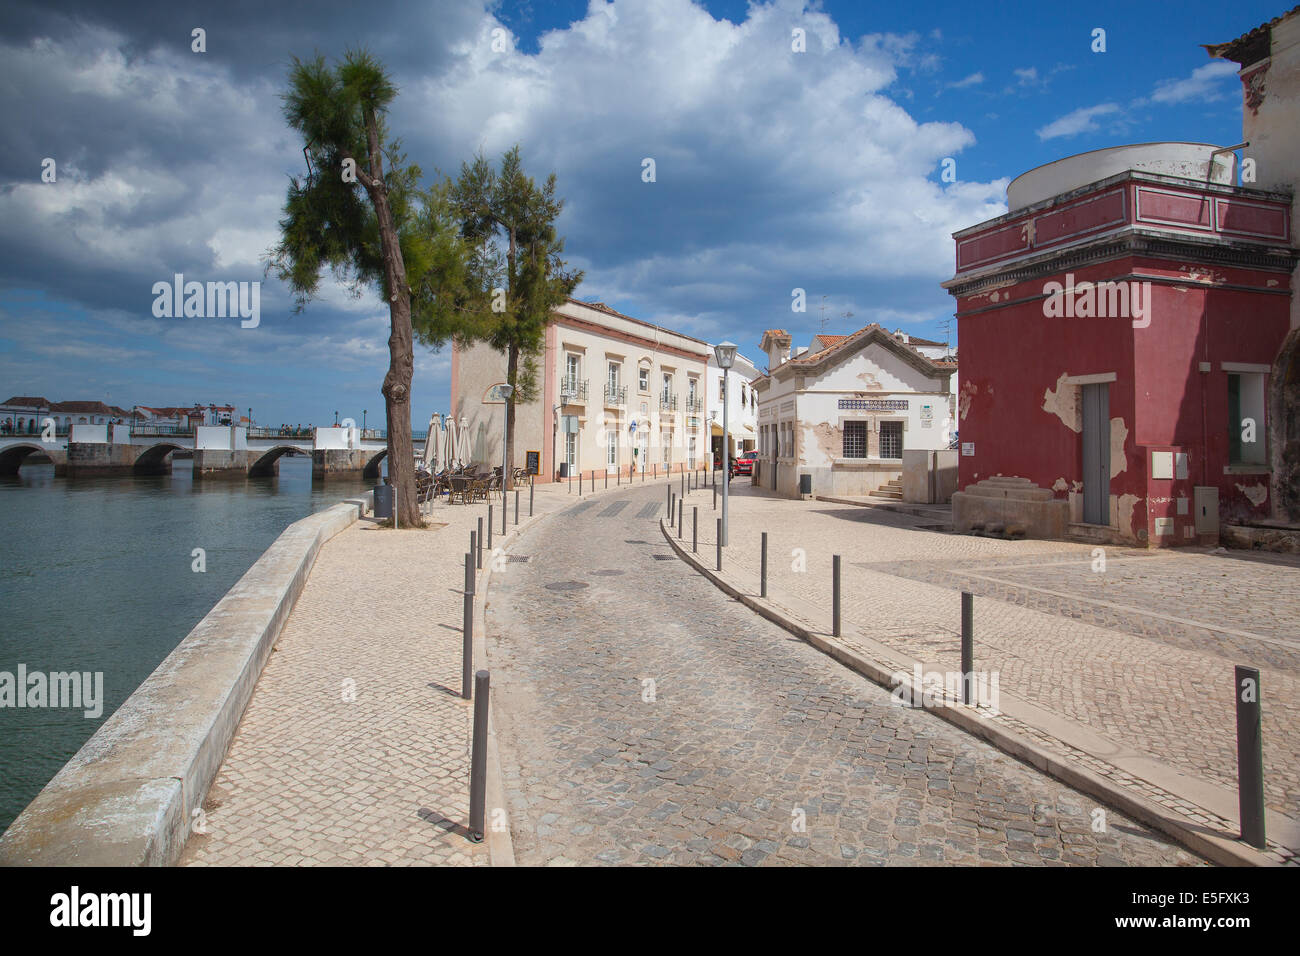 TAVIRA,PORTUGAL - JULY 2, 2014: Historic architecture with Moorish elements in Tavira city, Algarve,Portugal Stock Photo